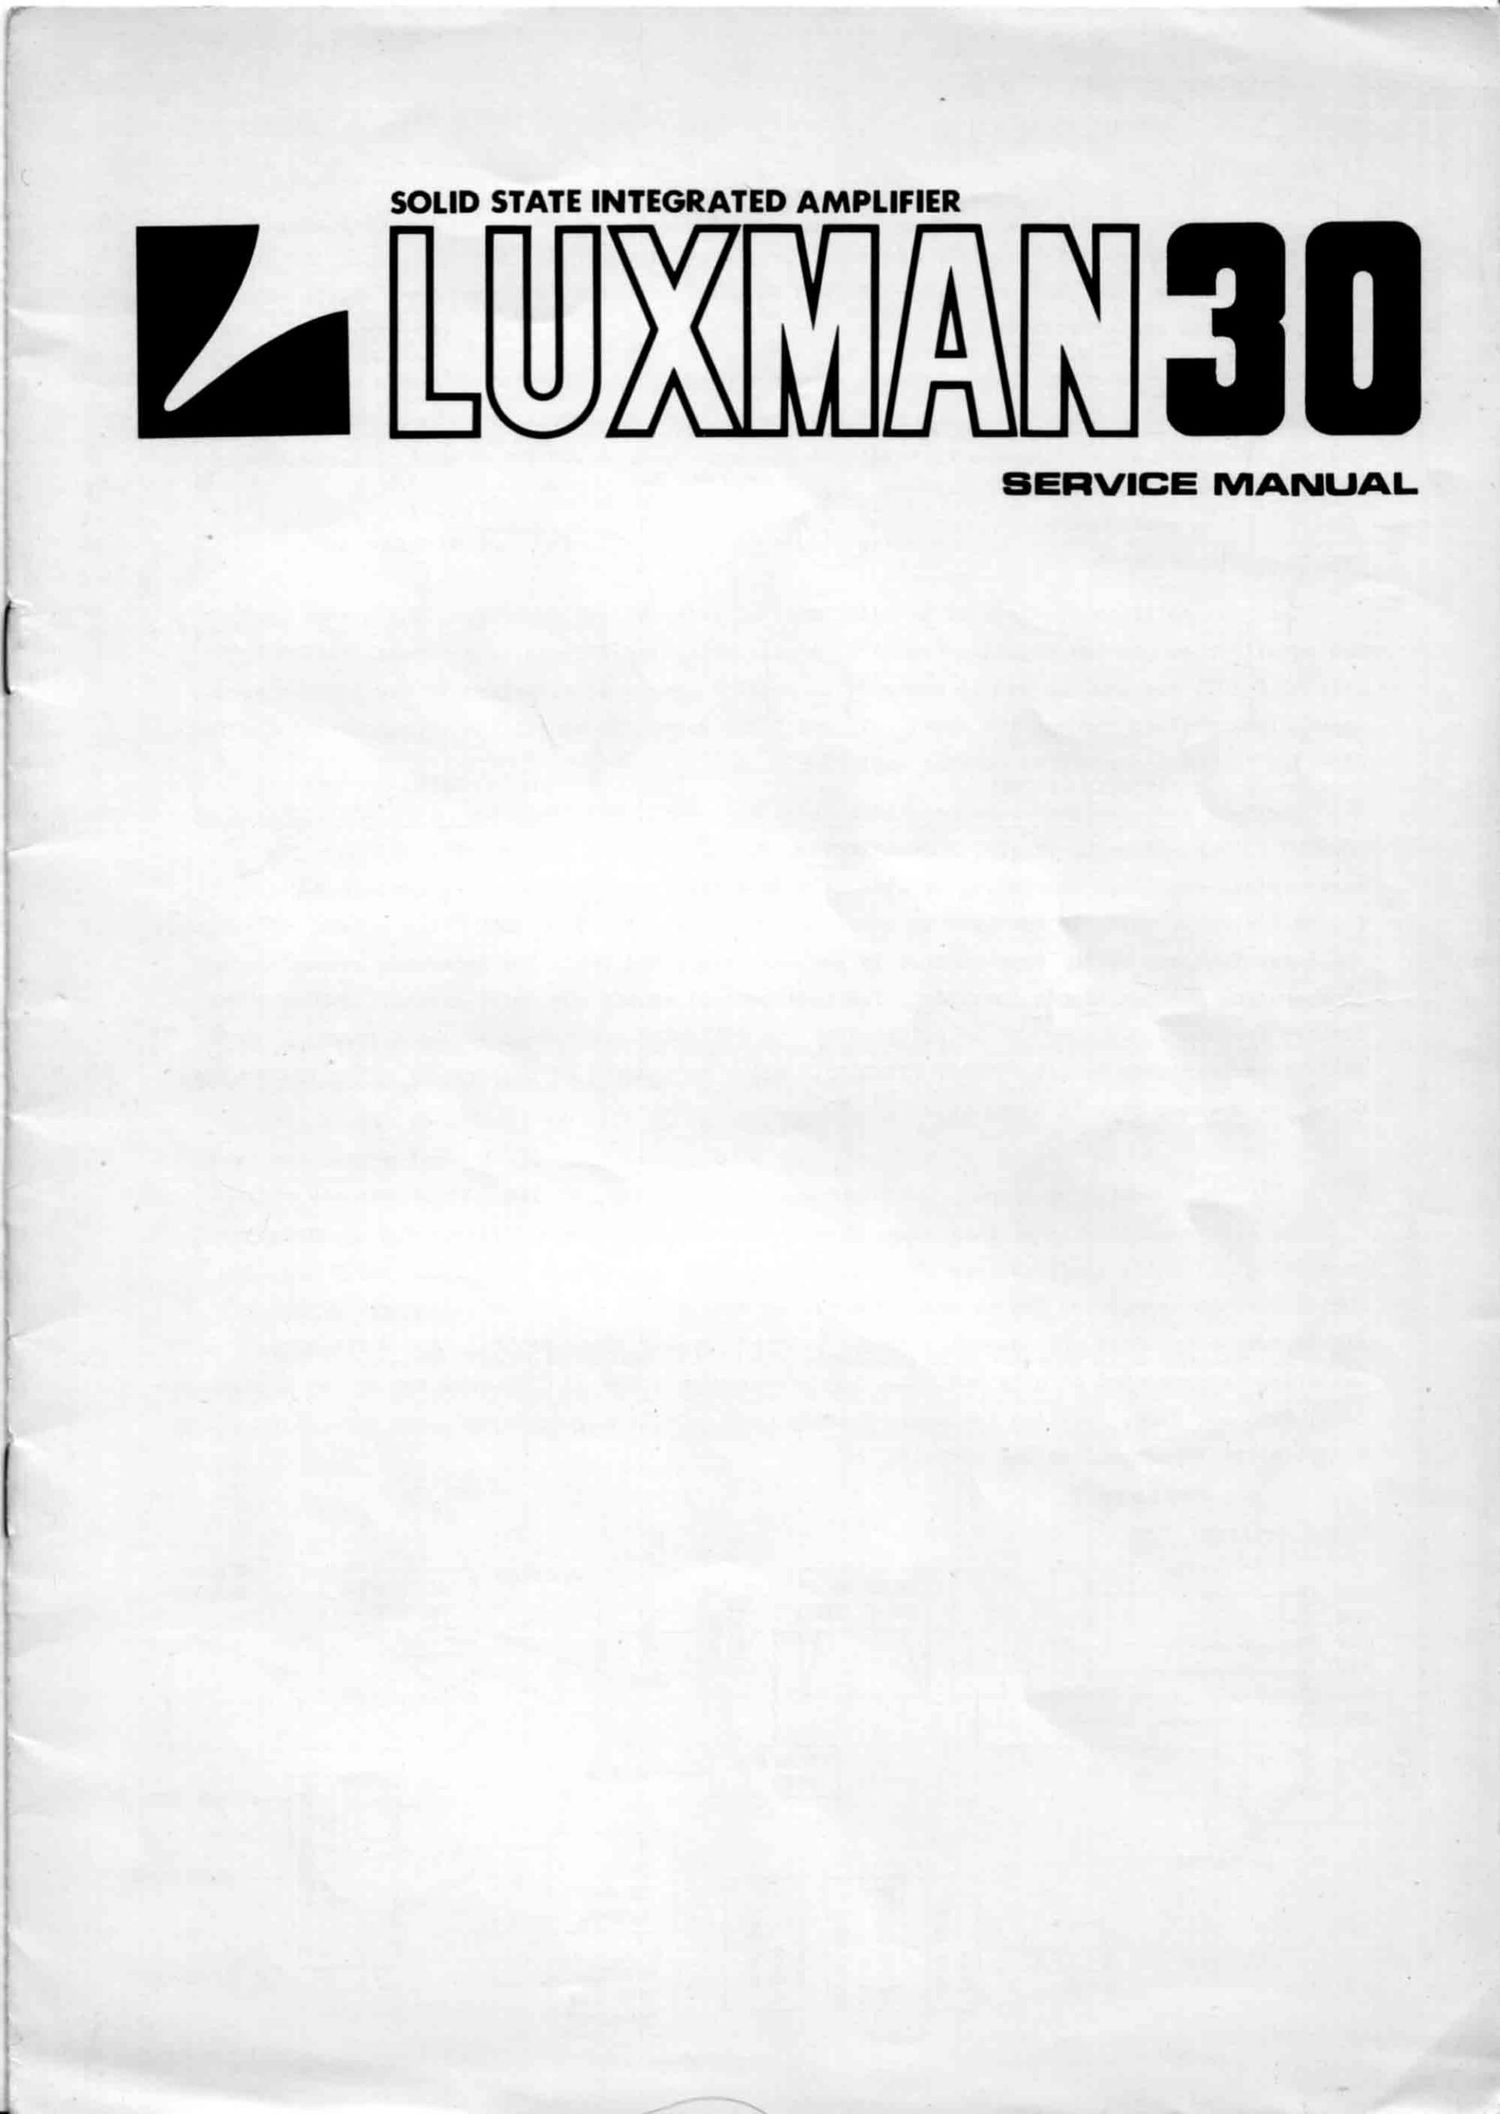 Luxman 30 Service Manual